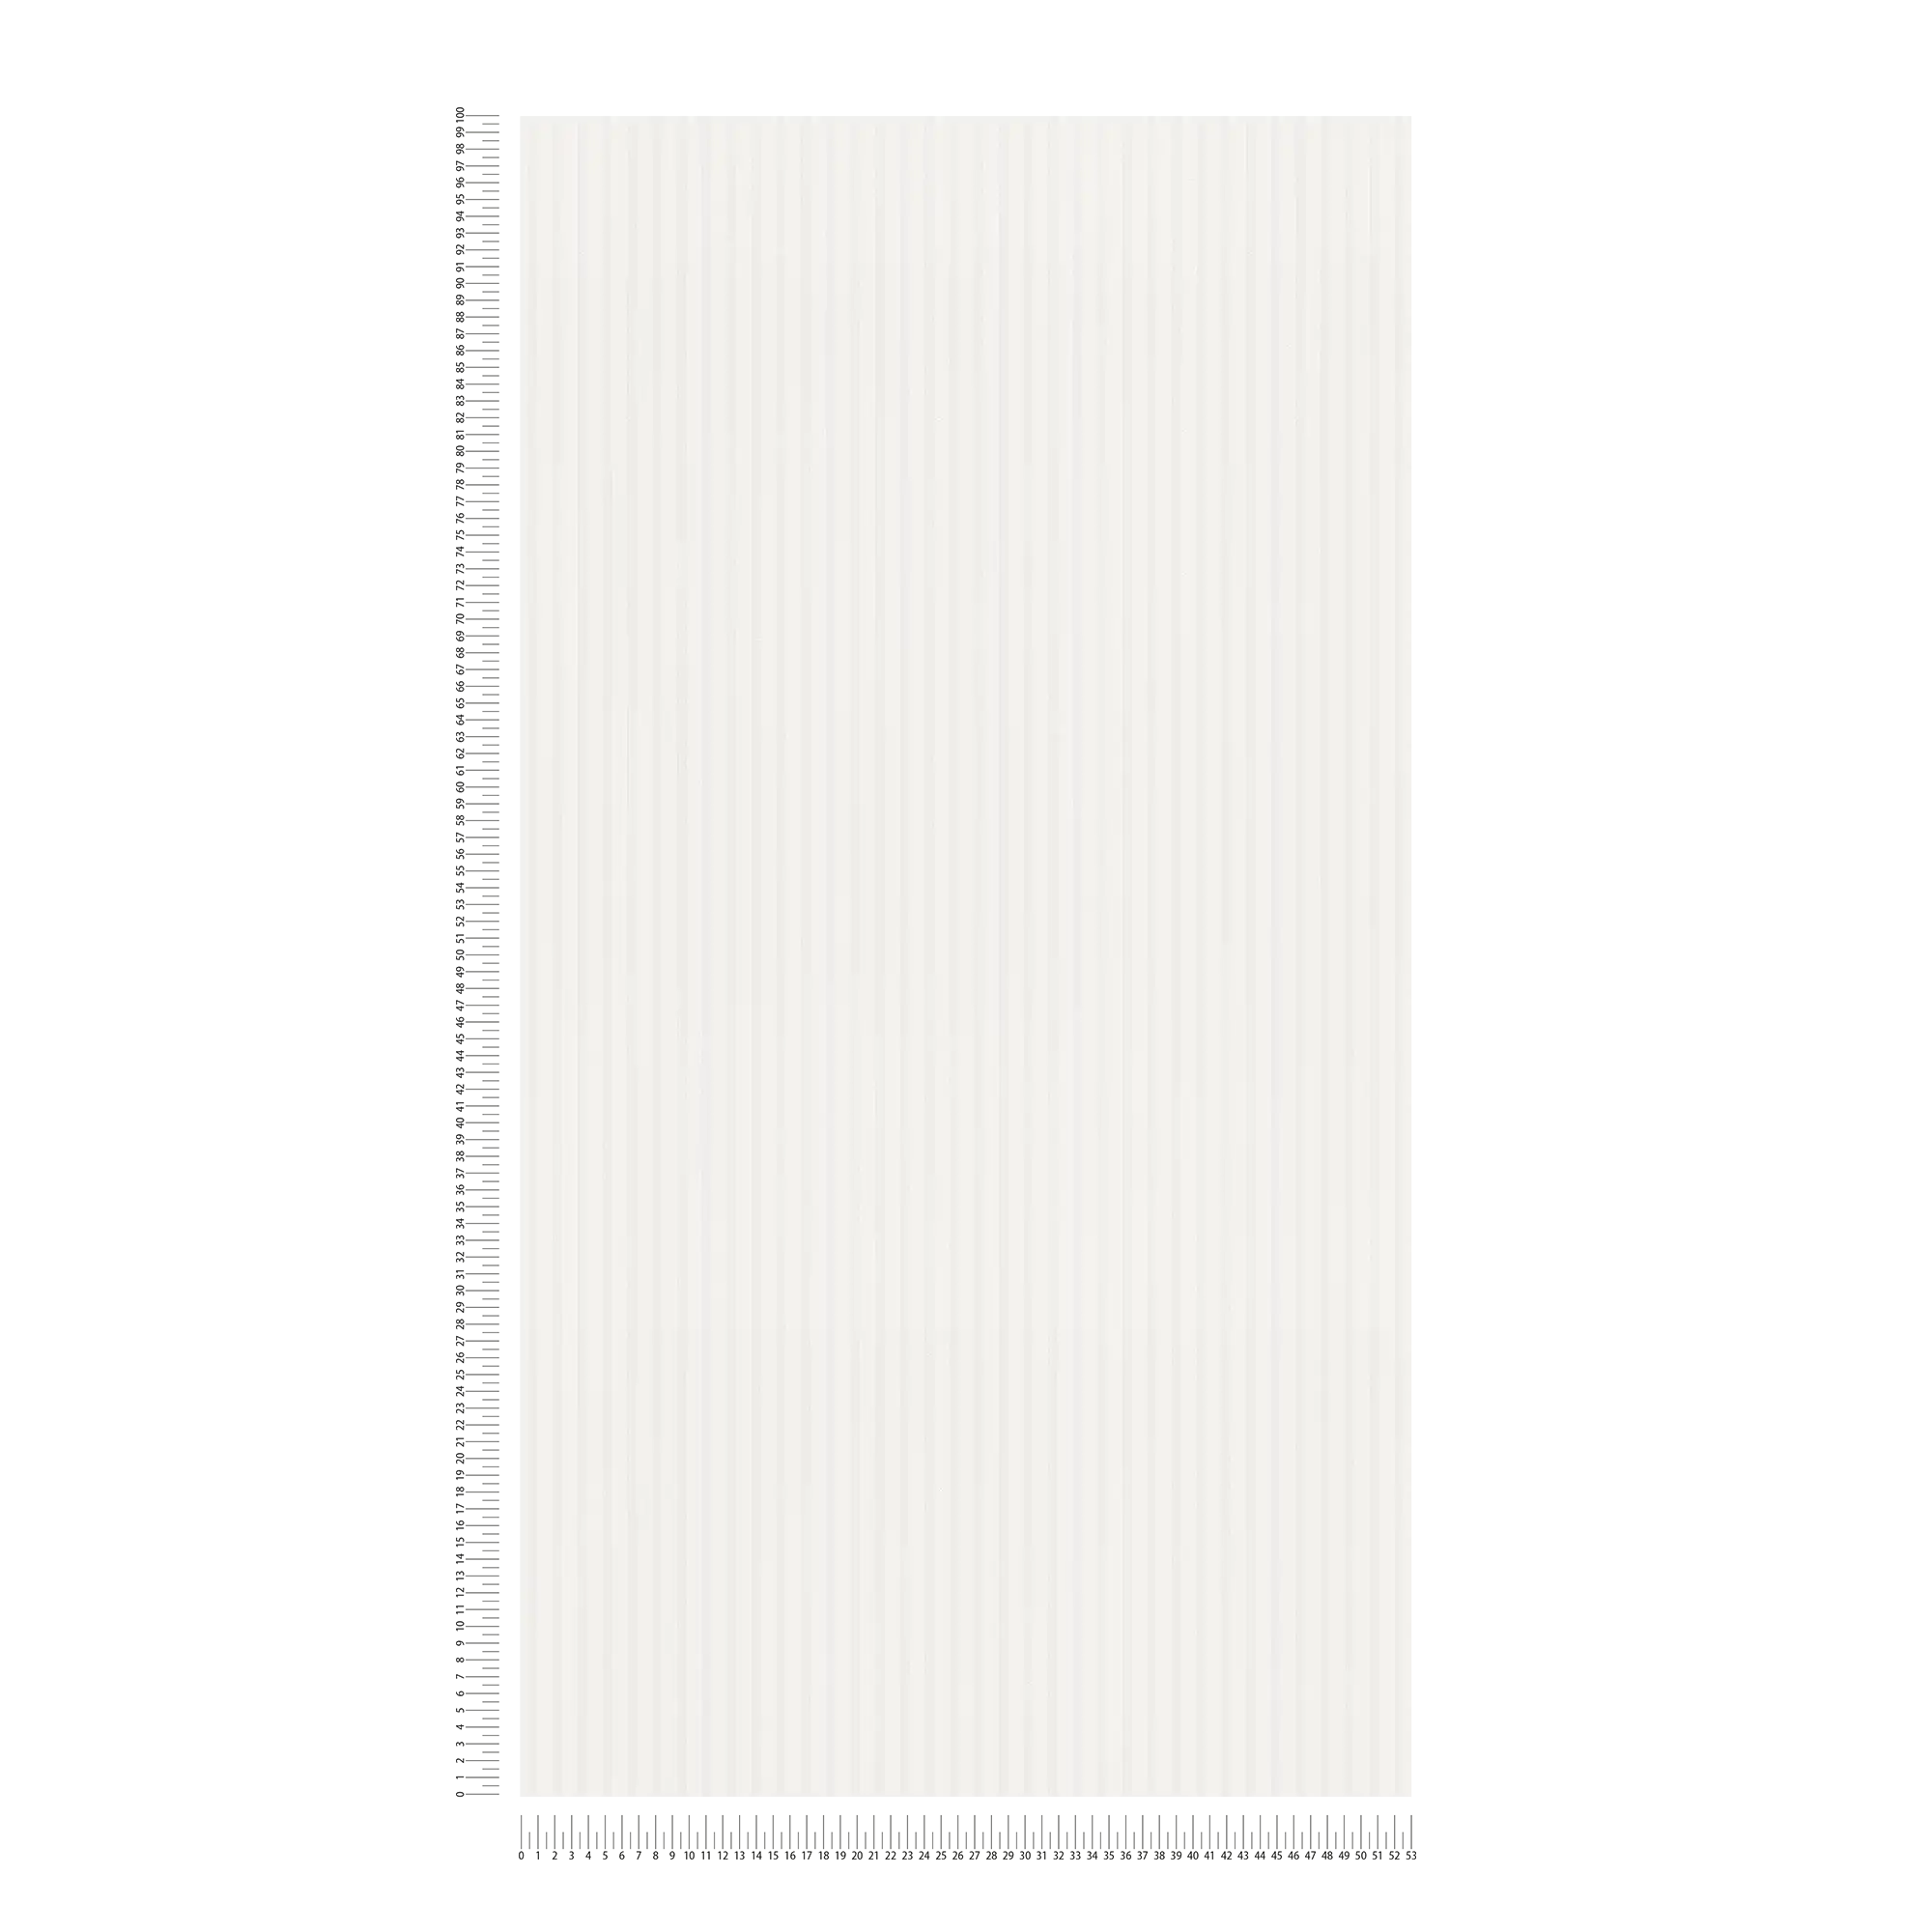             Narrow striped wallpaper in bright white - white, beige
        